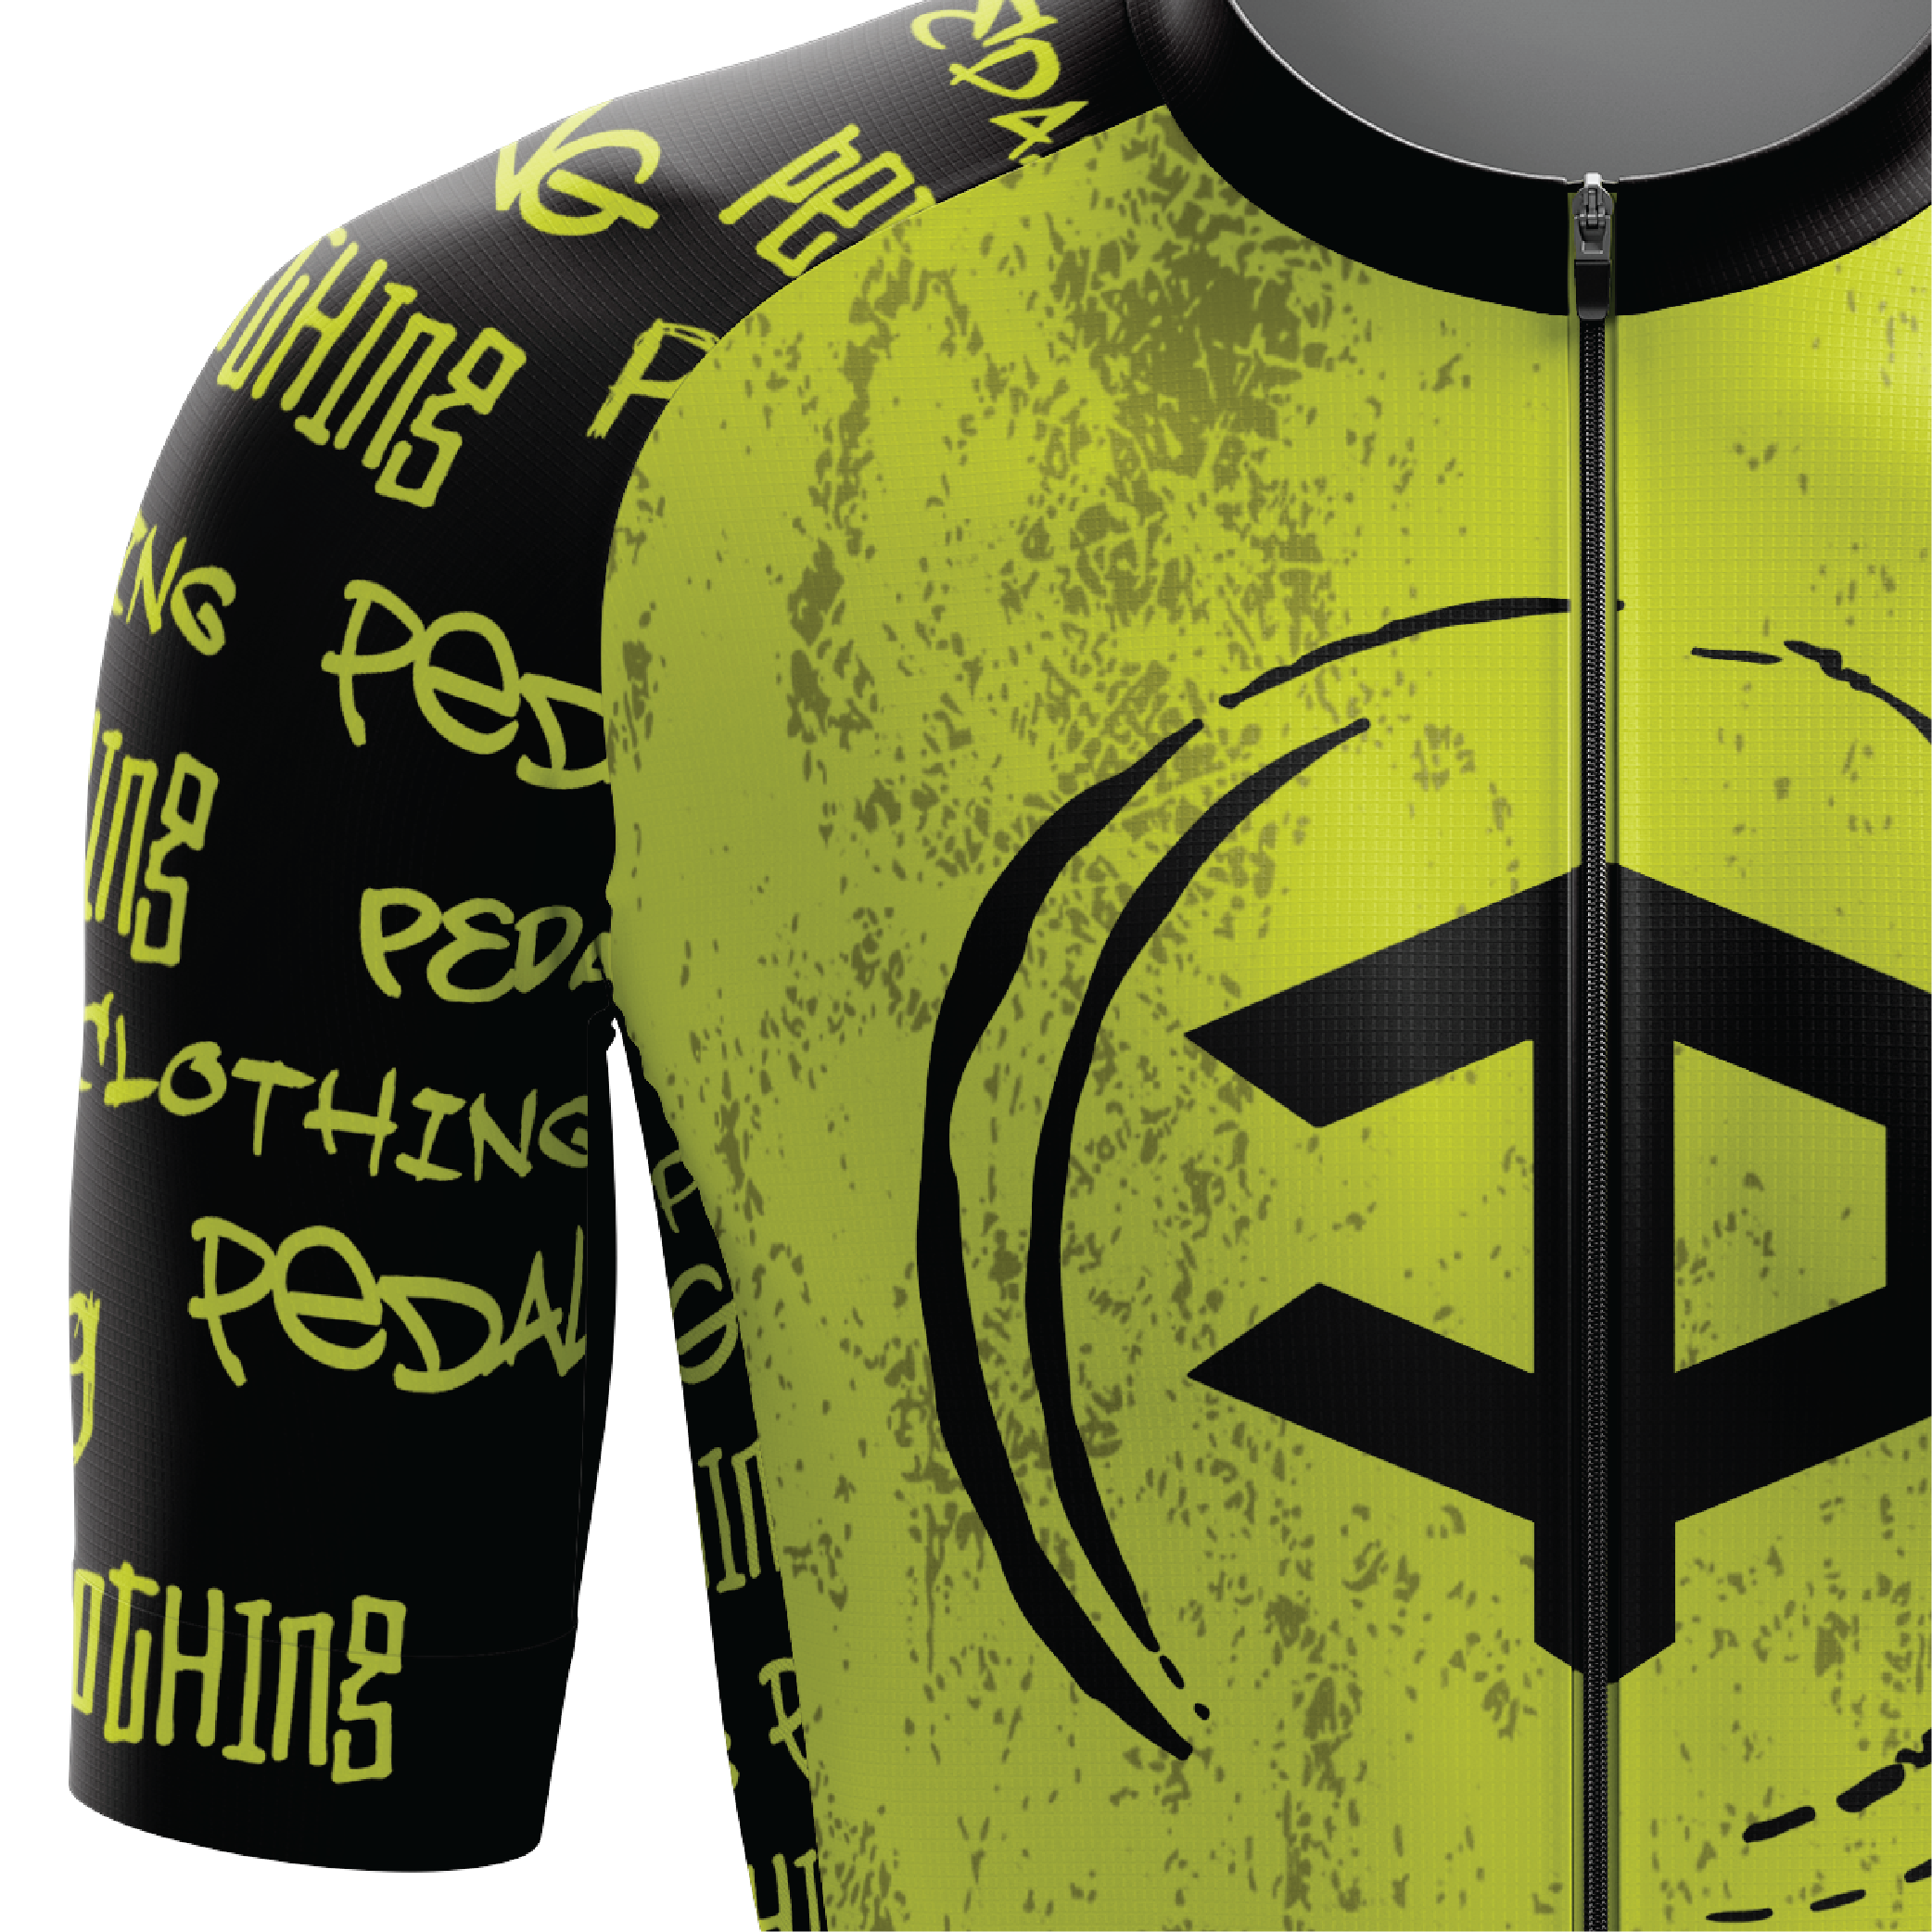 Men's Yellow Grunge V2 Short Sleeve Cycling Jersey